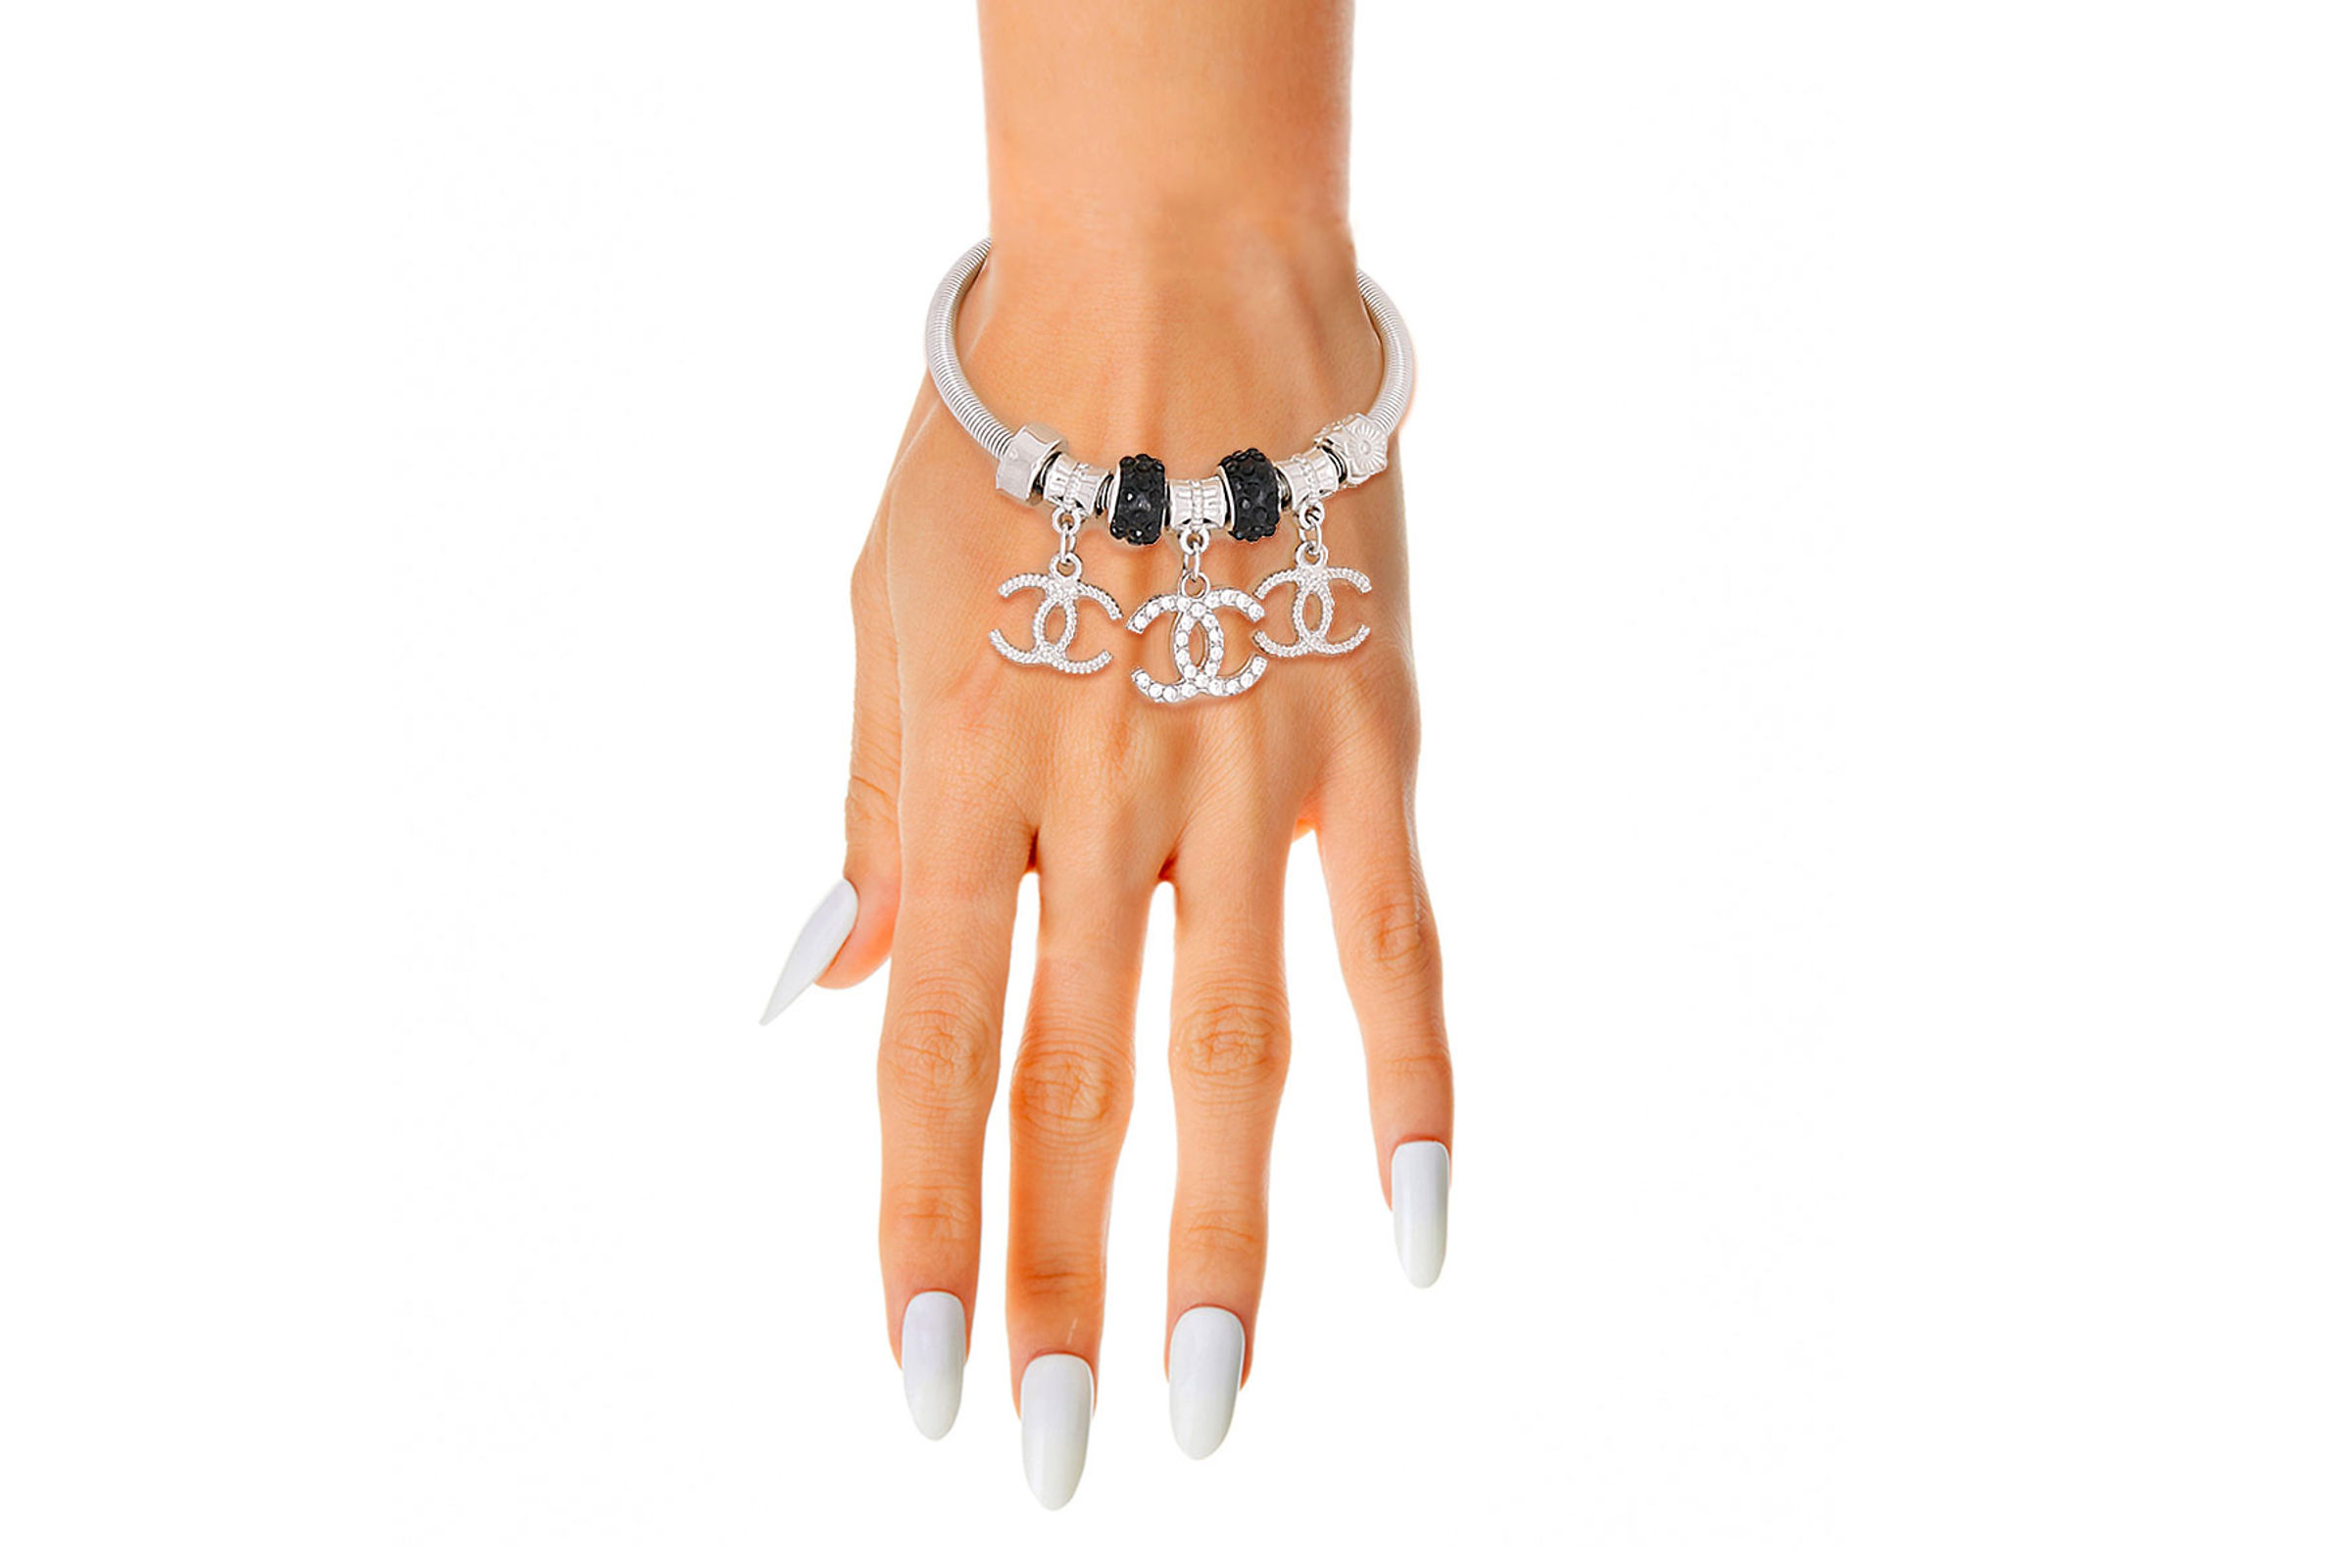 Wholesale Dozen LV Charm Bead Bracelets